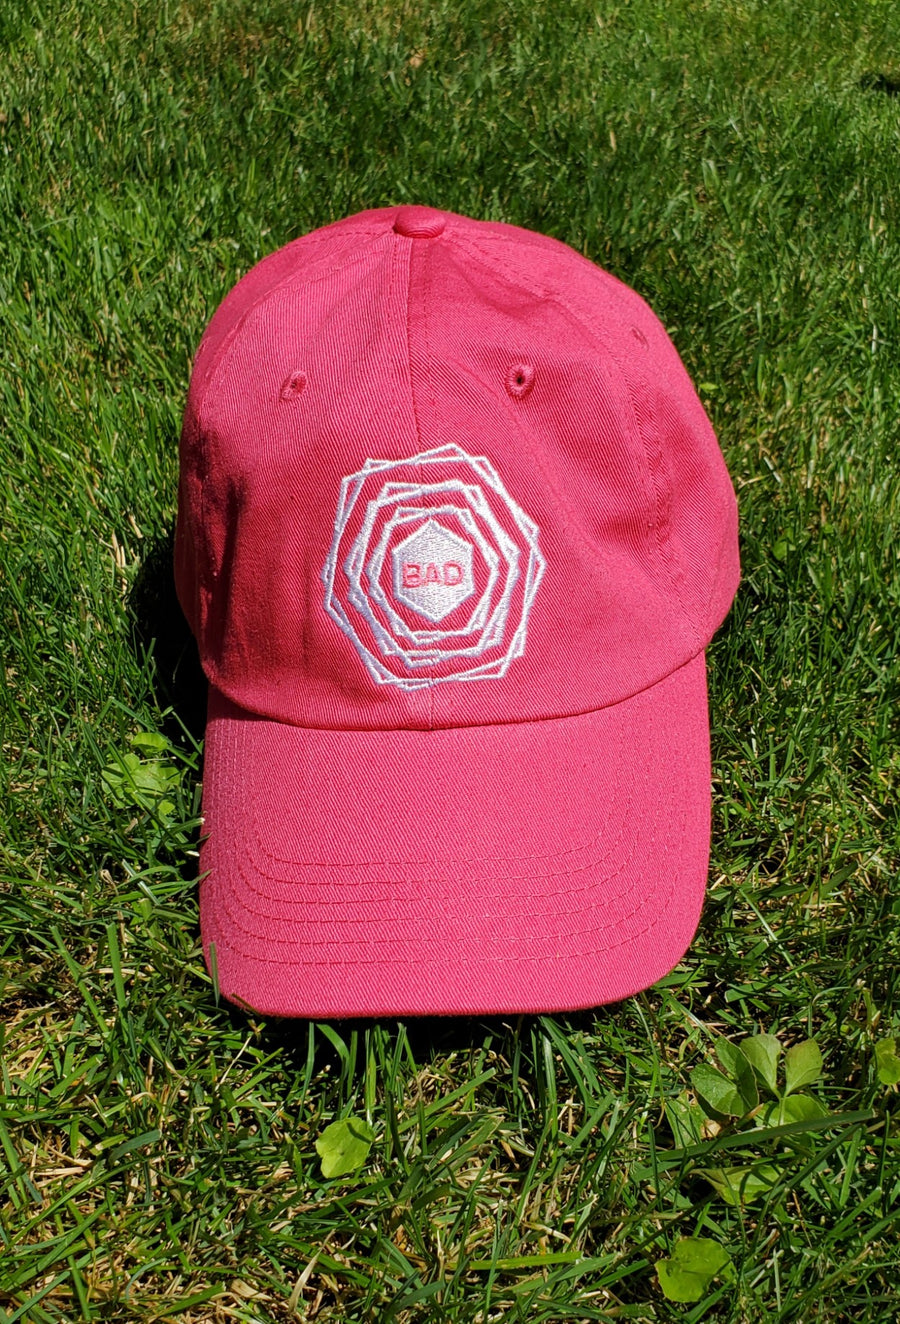 Neon pink baseball cap